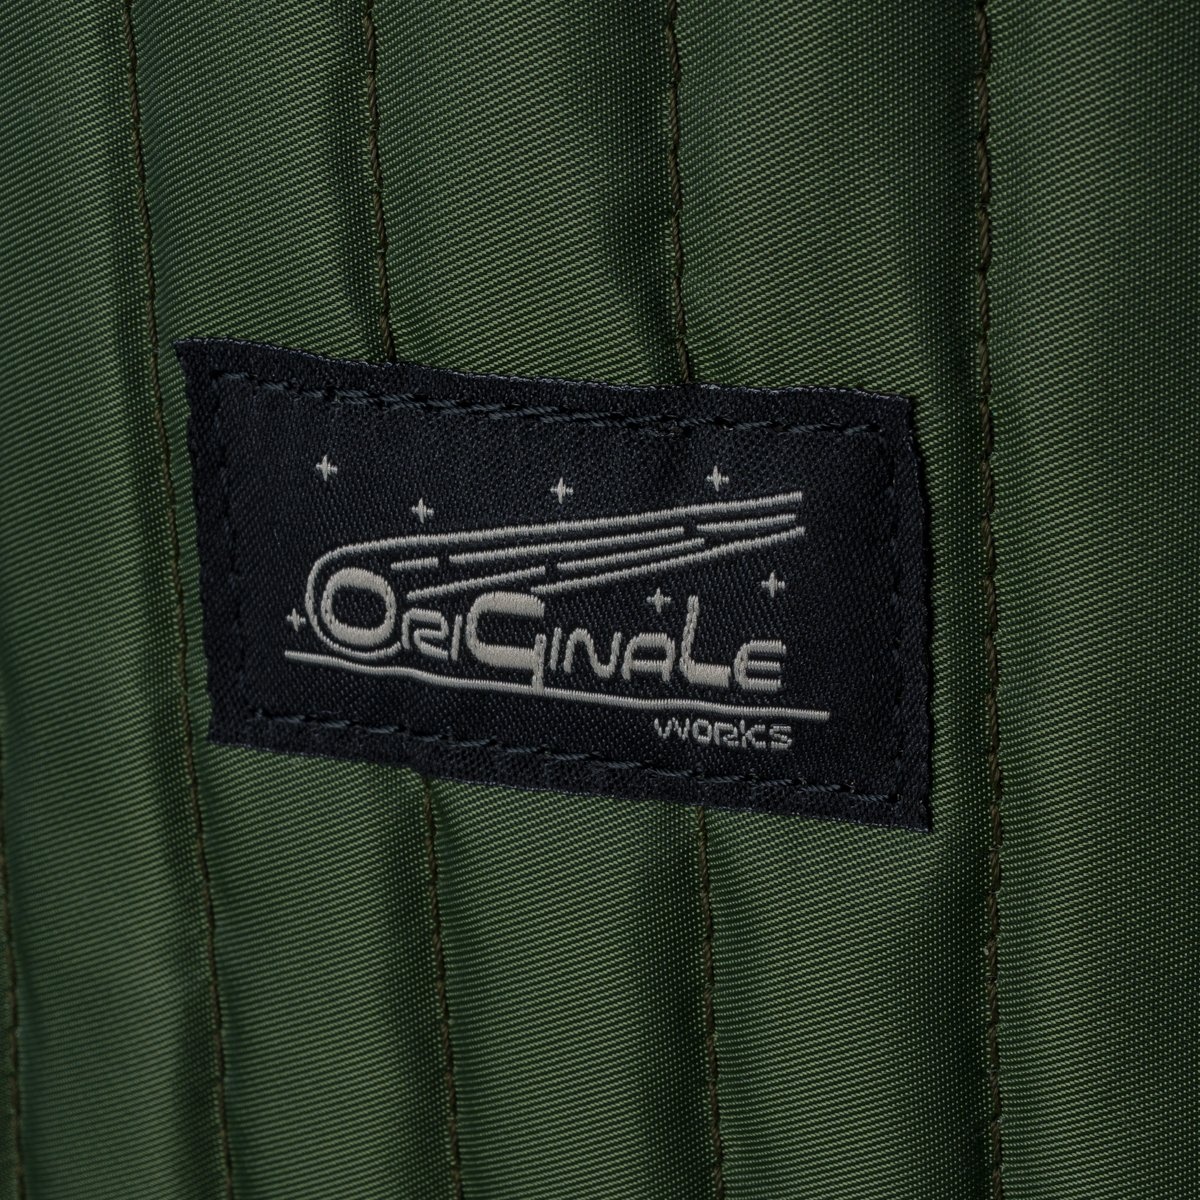 OGL-ORI-MILLIE-CARALL-GRN OGL Originale Tech Material Millie Carry-All Tote Bag - Green - 5